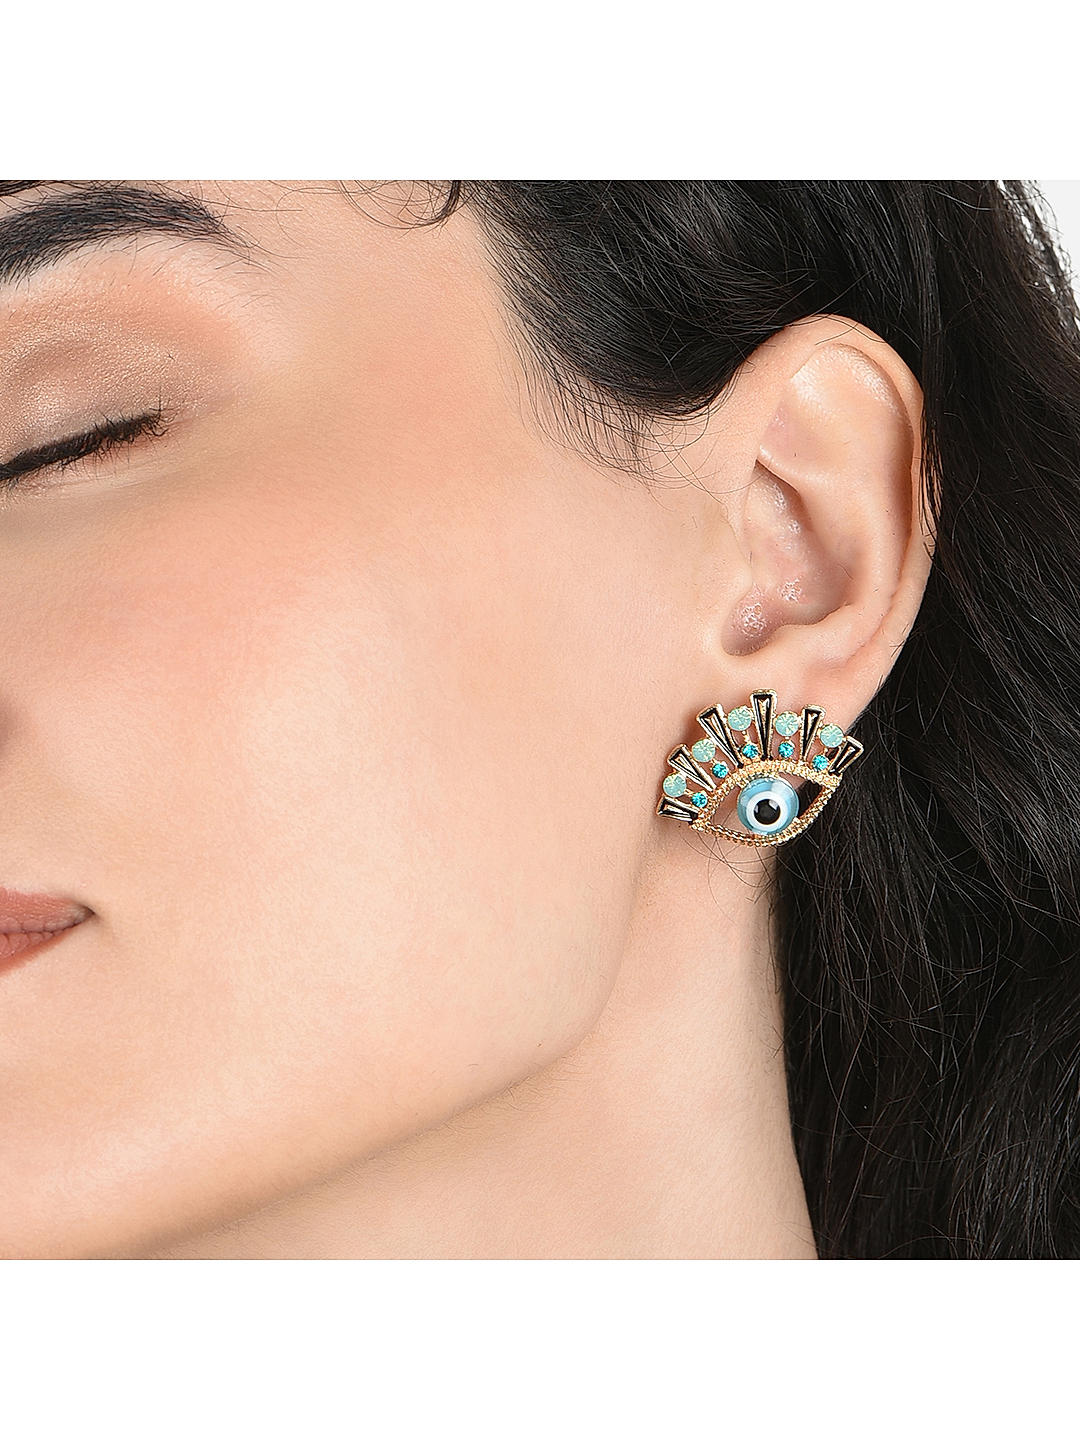 India Jewelry Yellow Earrings | Jhumka Earrings Indian Ethnic | Yellow  Jhumka Earrings - Stud Earrings - Aliexpress